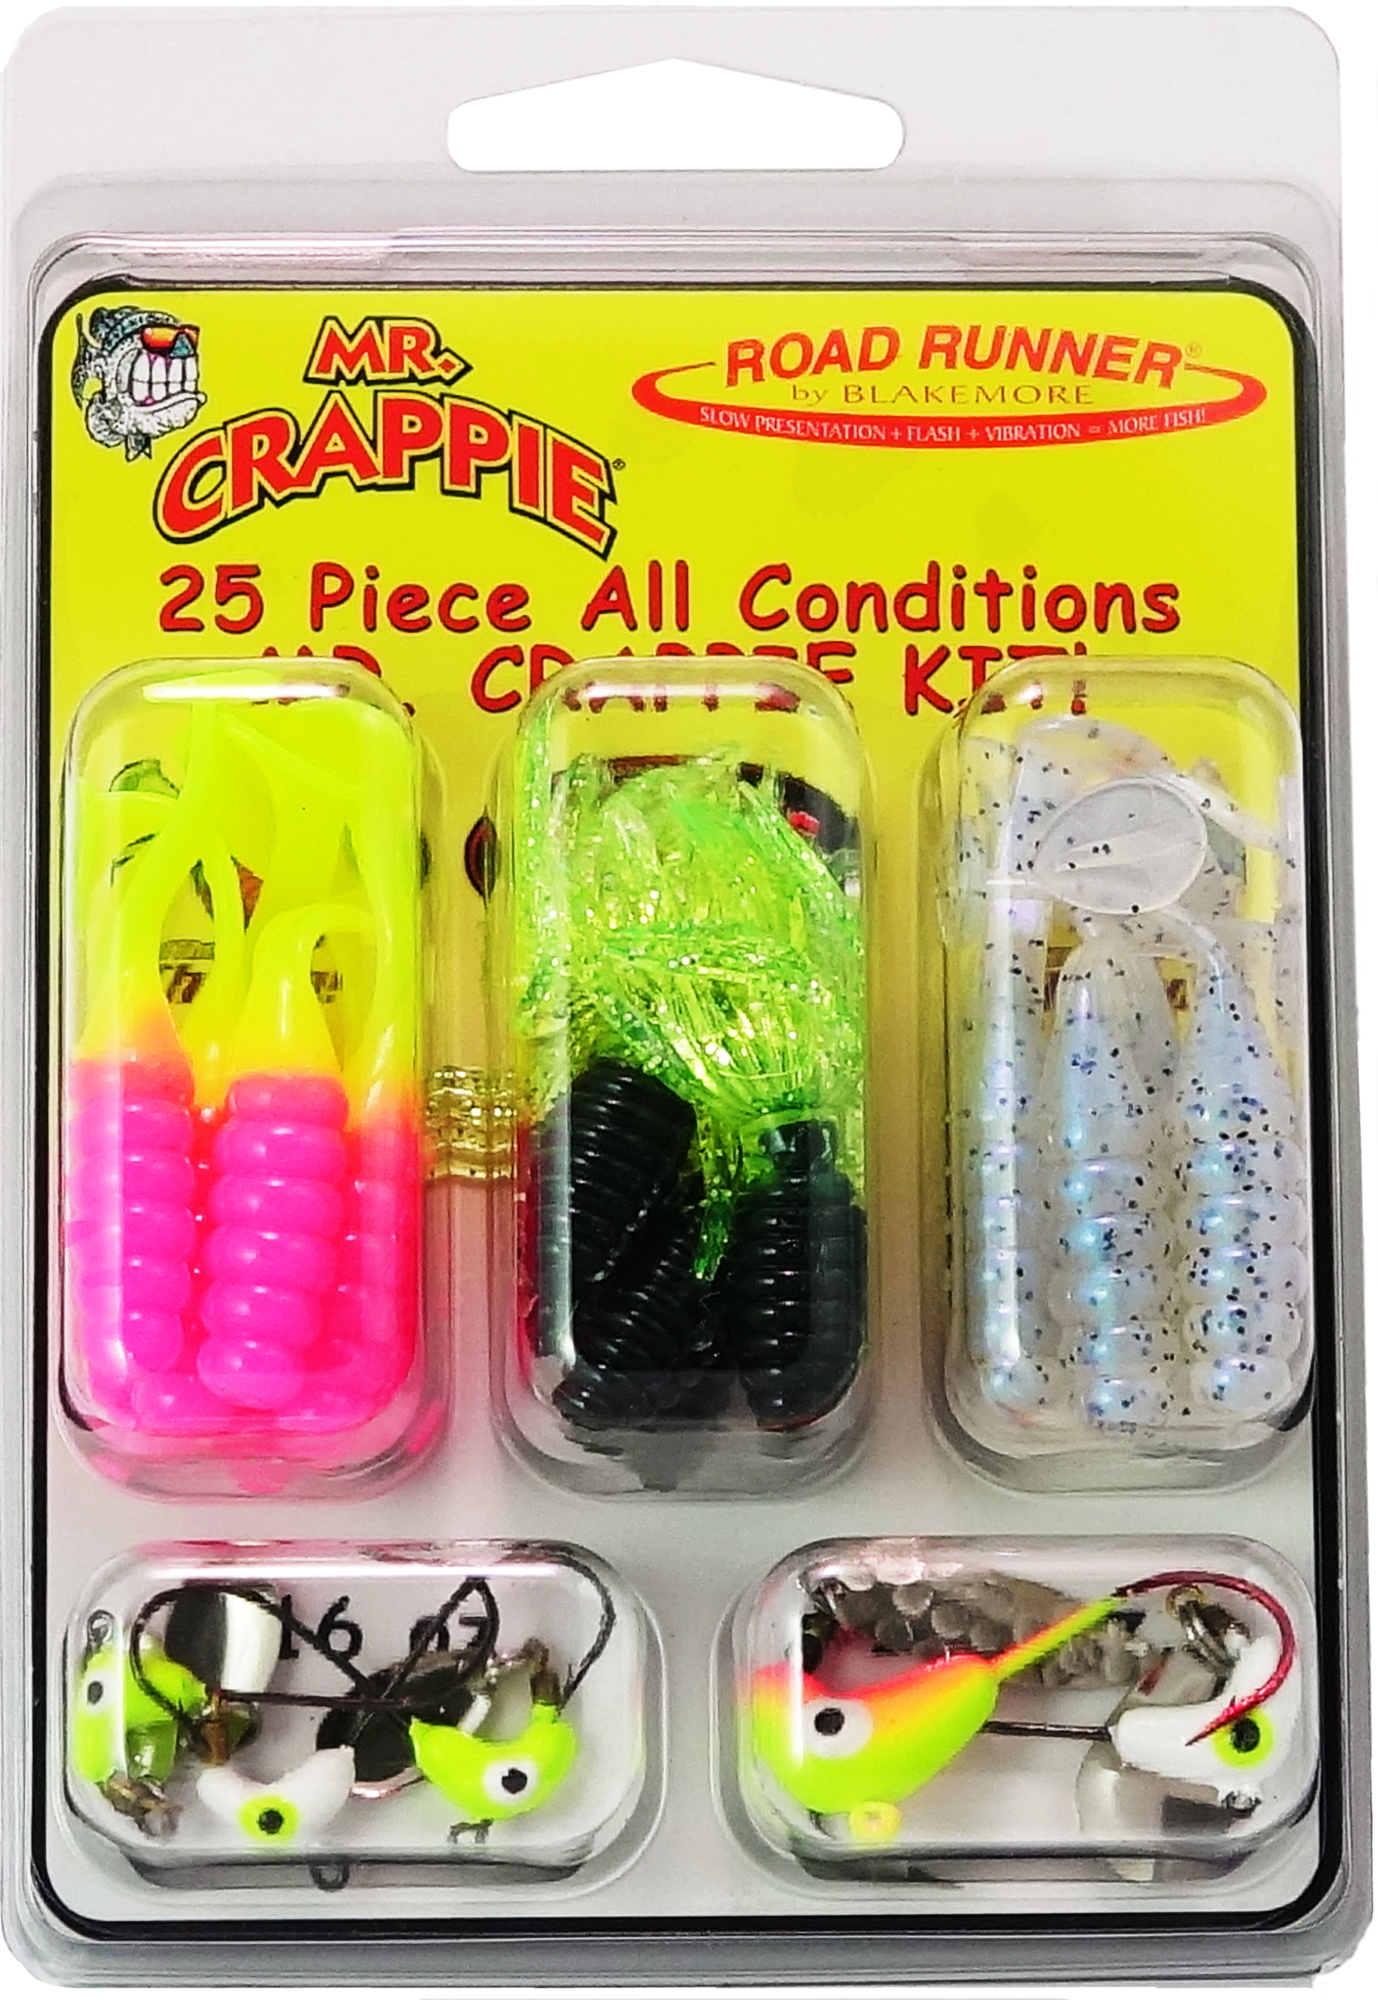 Road Runner 25 Piece Mr. Crappie Kit